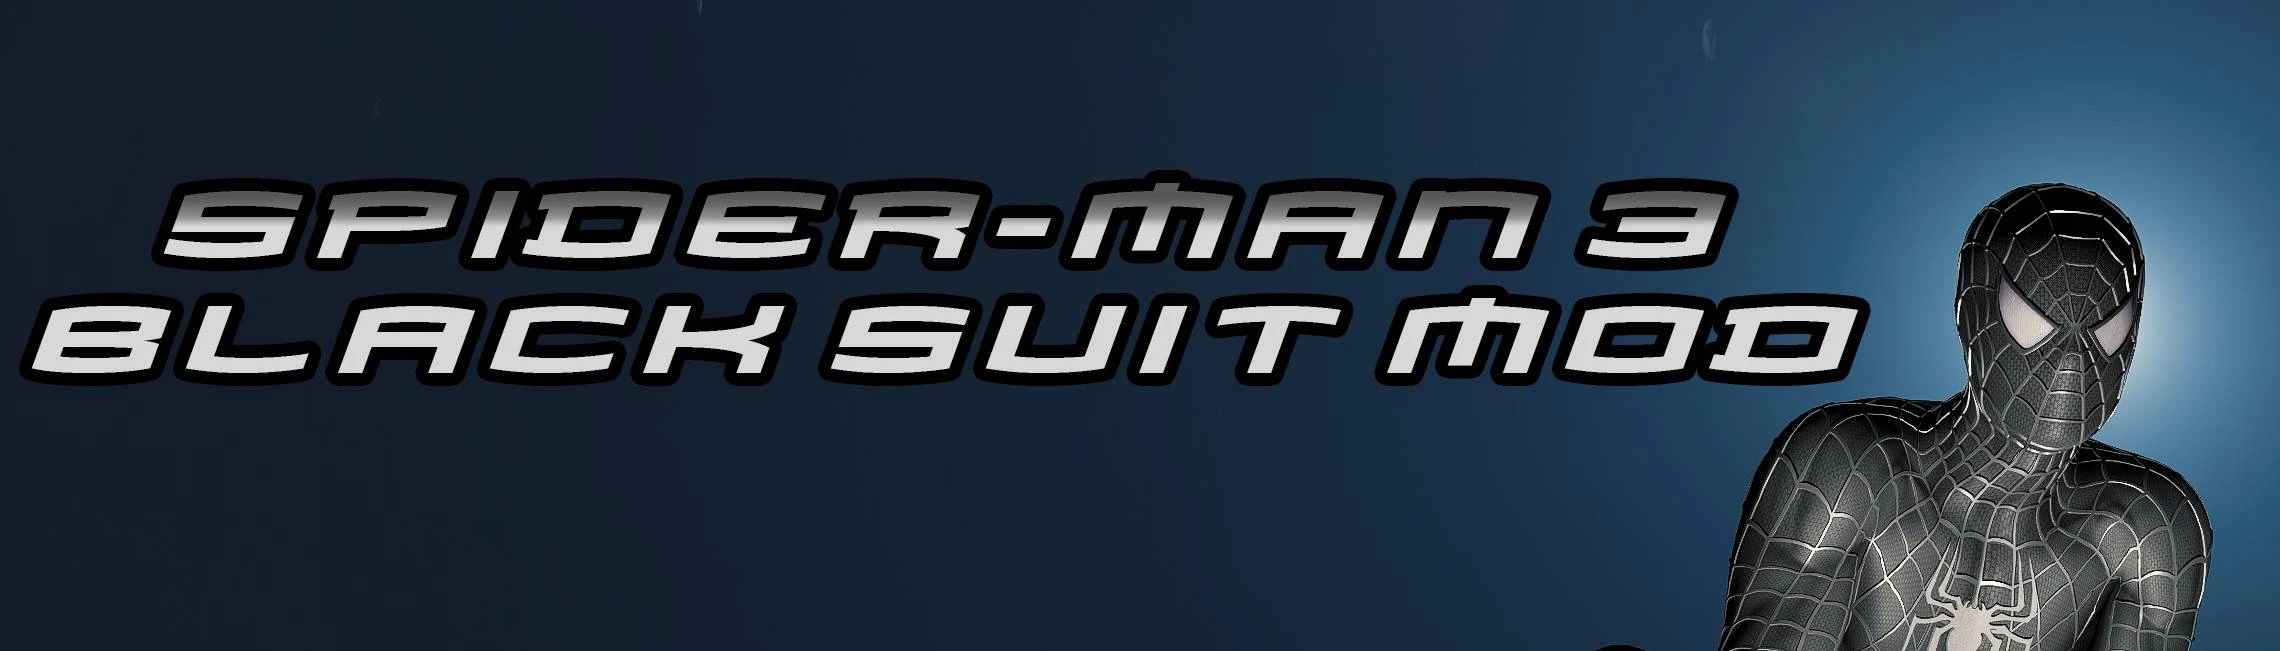 Anime Spiderman Bodysuit Black Raimi Cosplay Costume Carnival Halloween  Christmas Gift Superhero Jumpsuit Party For Adult Kids